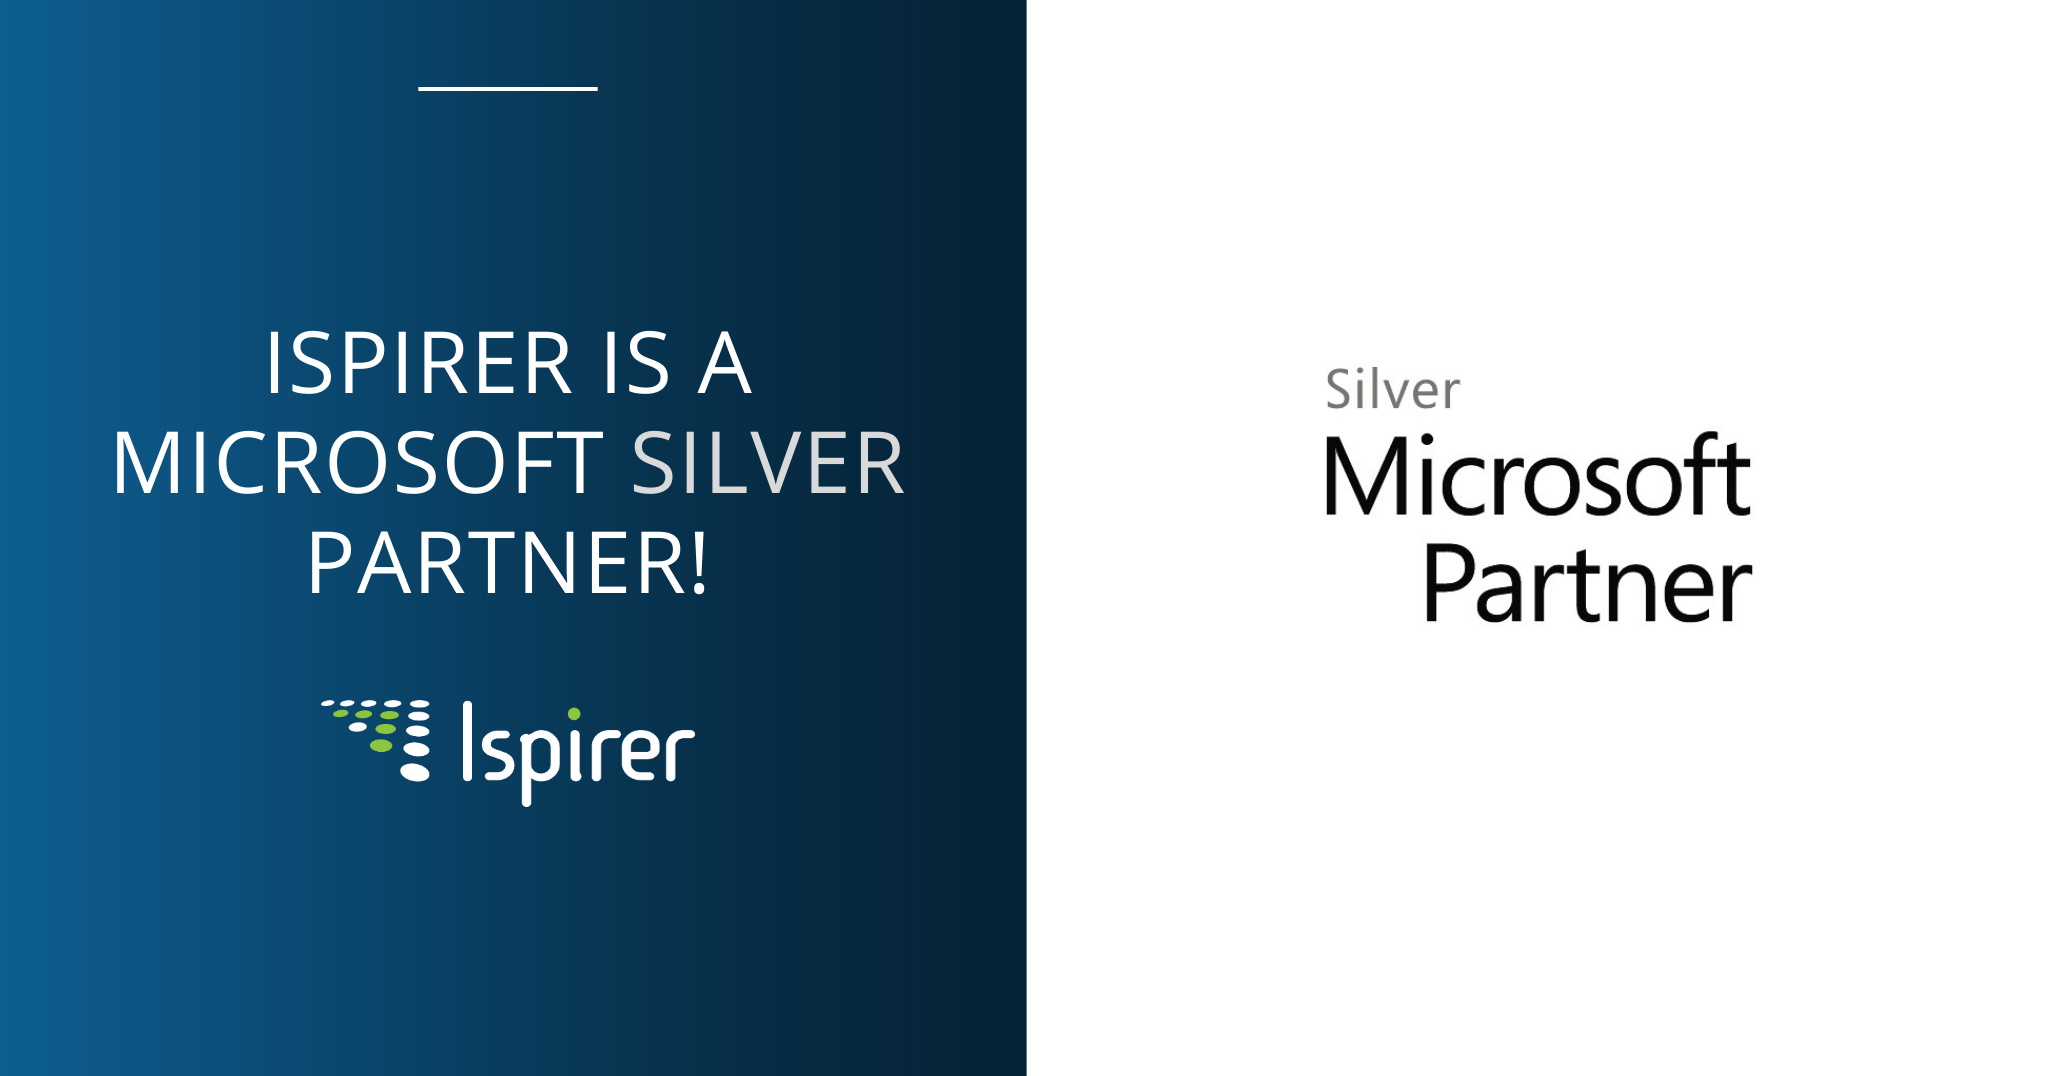 Ispirer and Microsoft Partnership Image